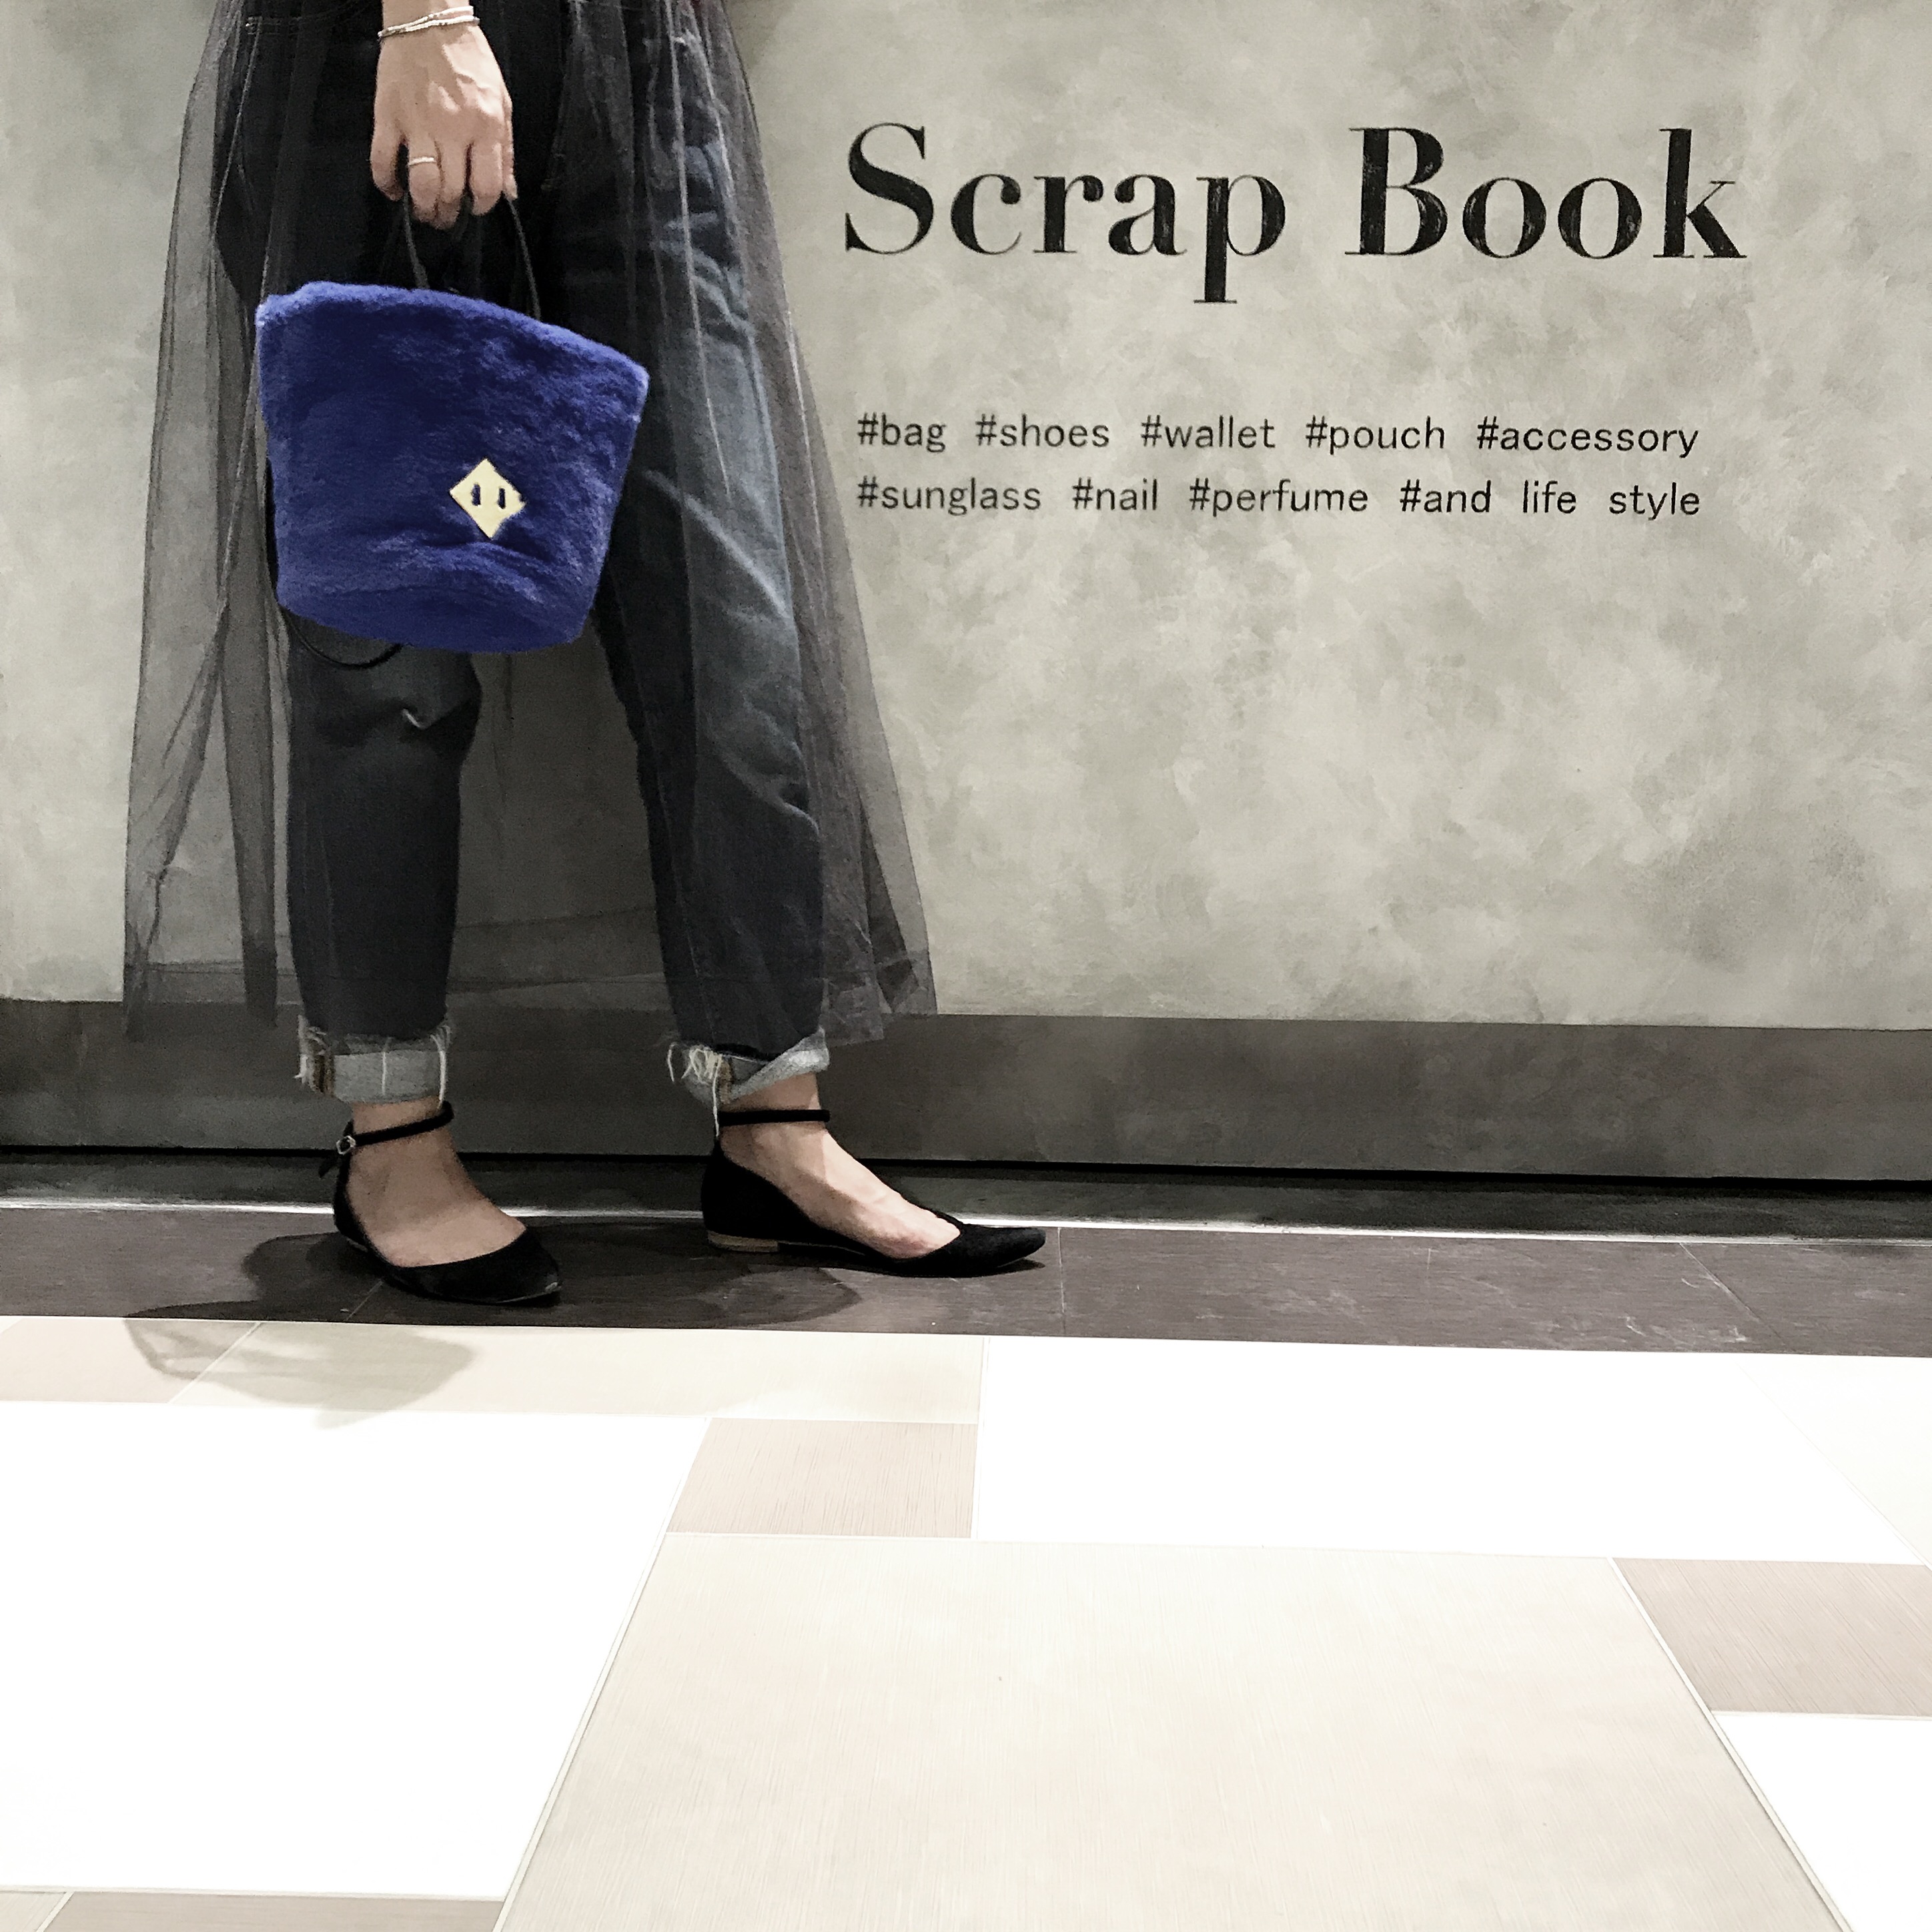 scrap book スクラップブック ルミネ 新宿 アトネック 先行販売 ルミネカード10%オフ エコムートン